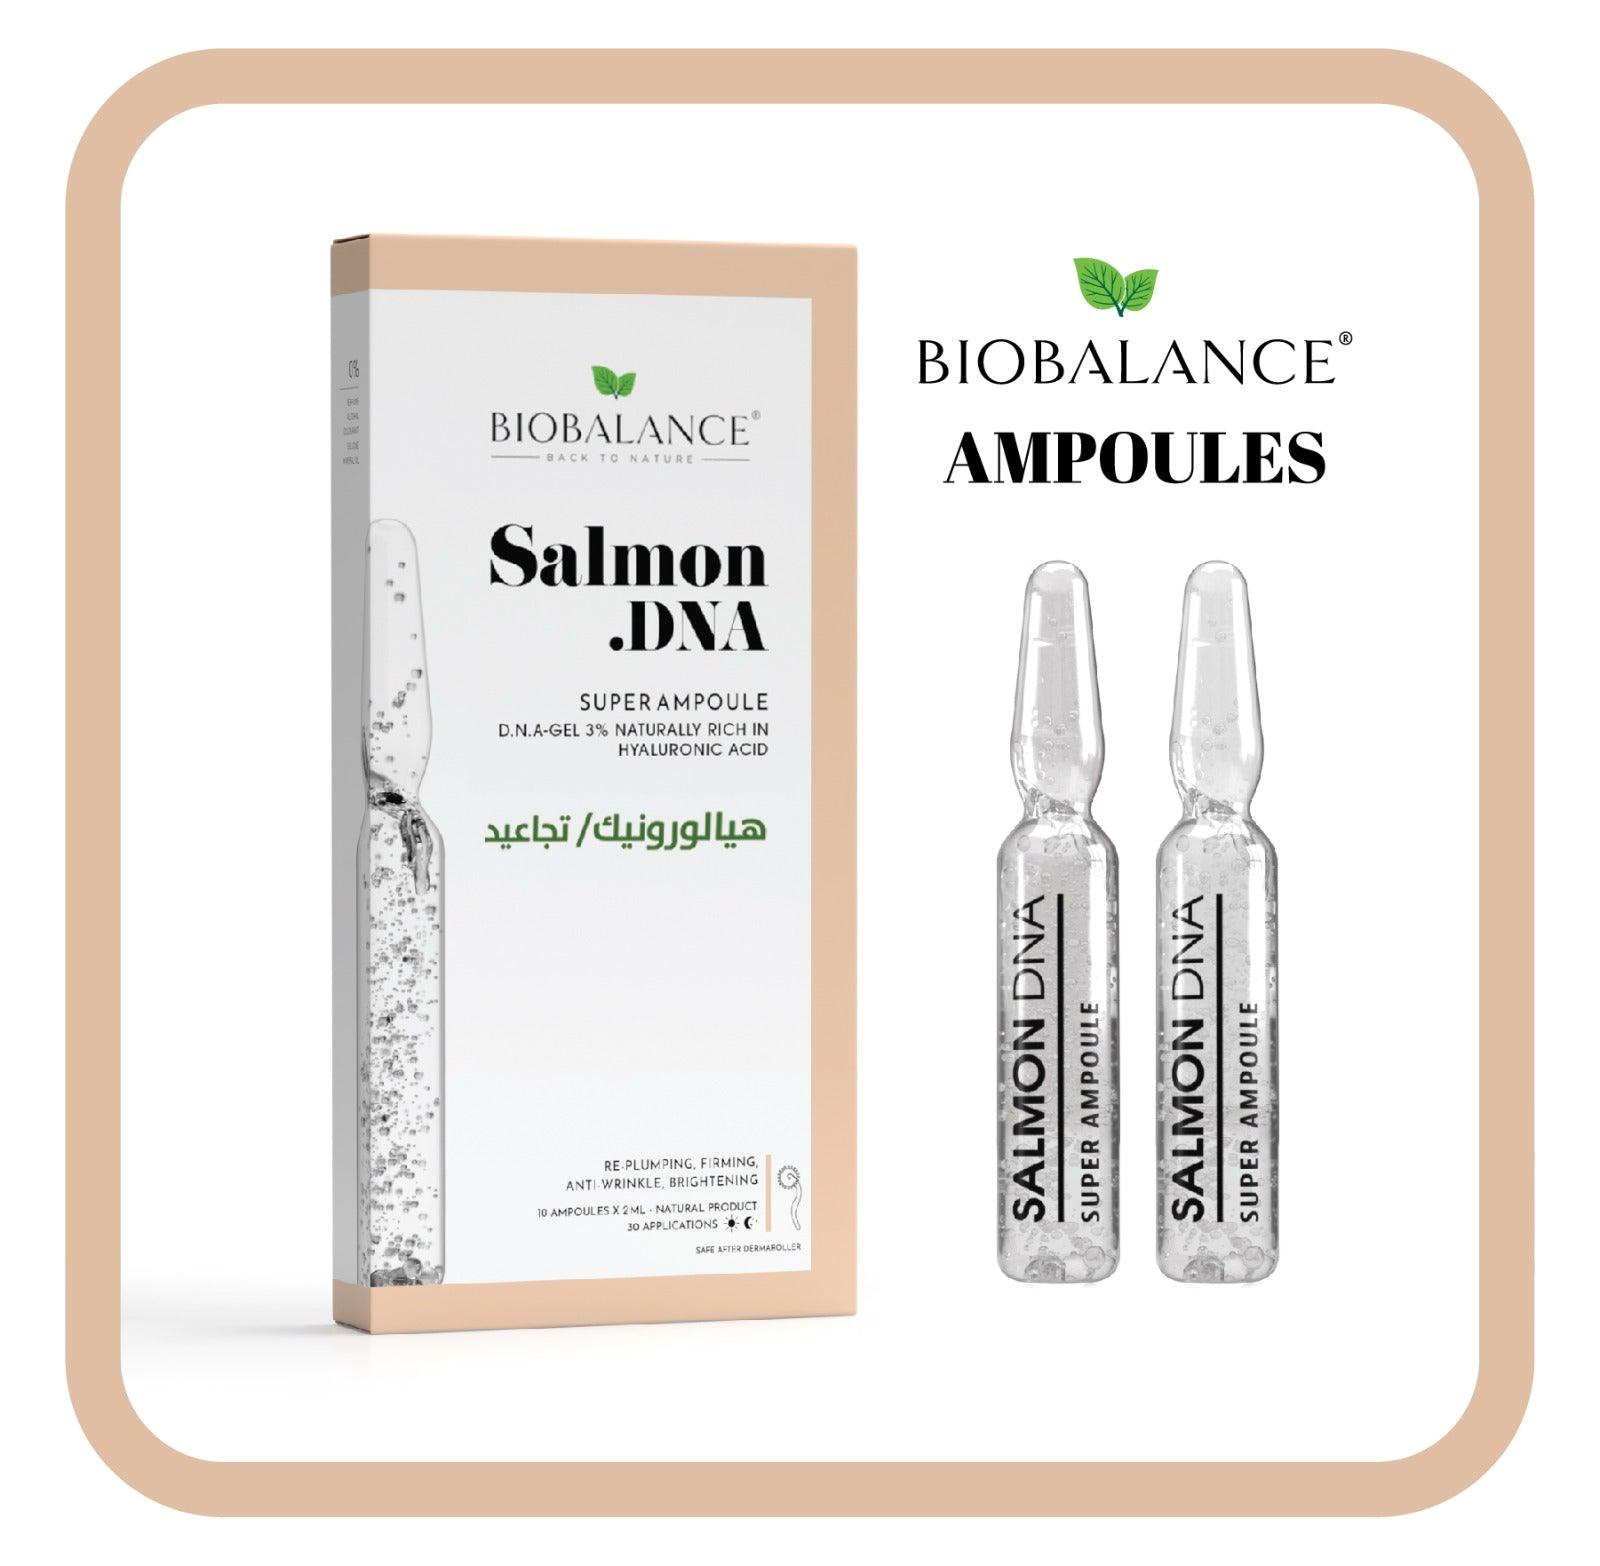 Bio Balance Anti Wrinkles Salmon DNA Super Ampoule 10 x 2 ml - Mrayti Store